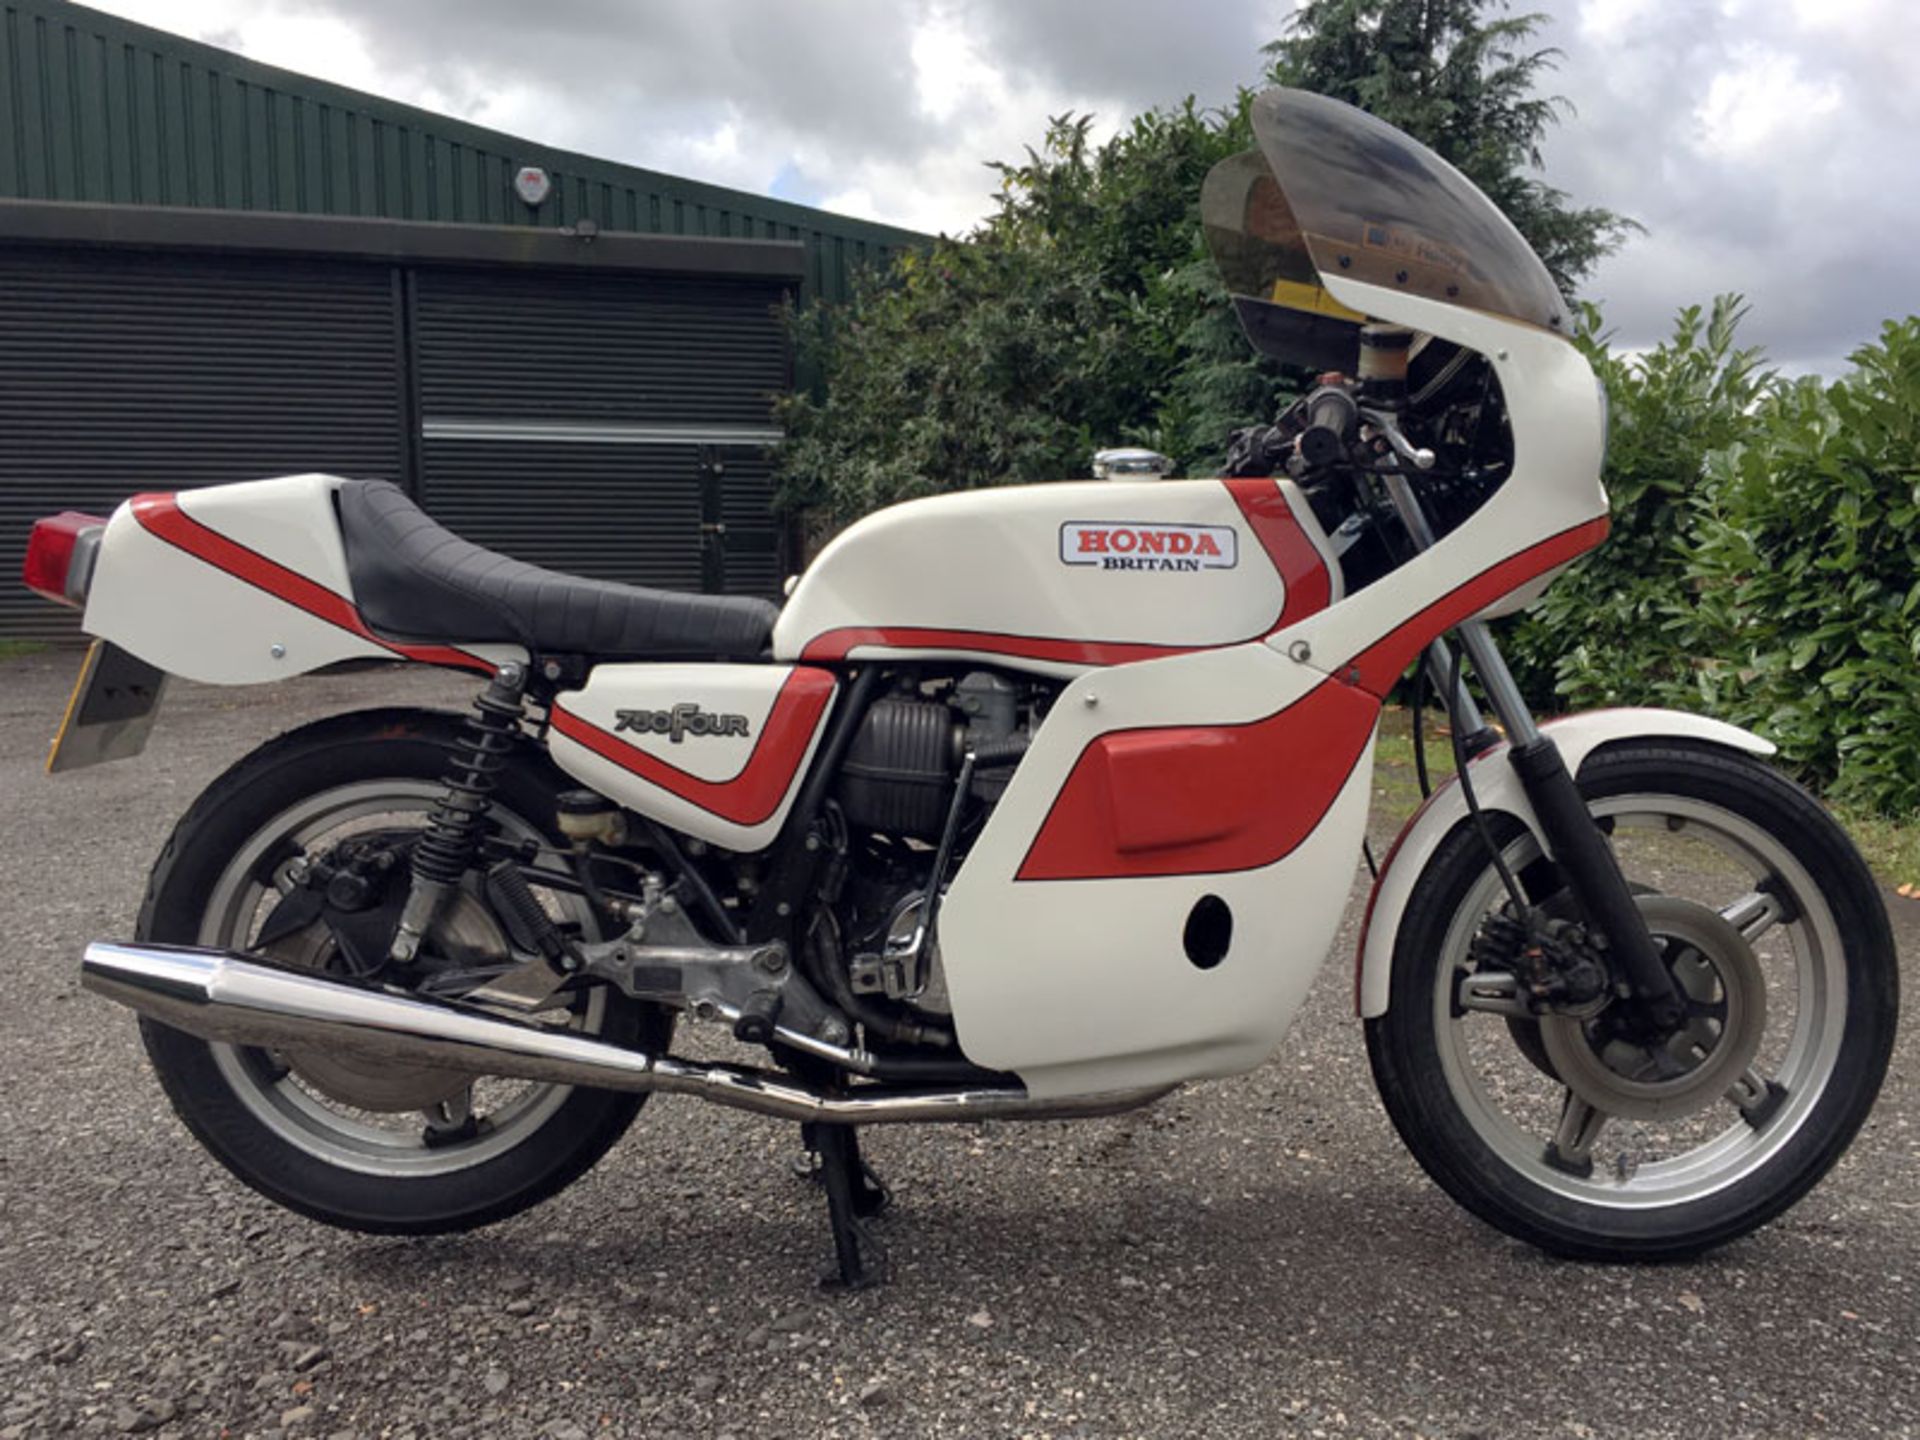 1979 Honda CB750 SS Britain